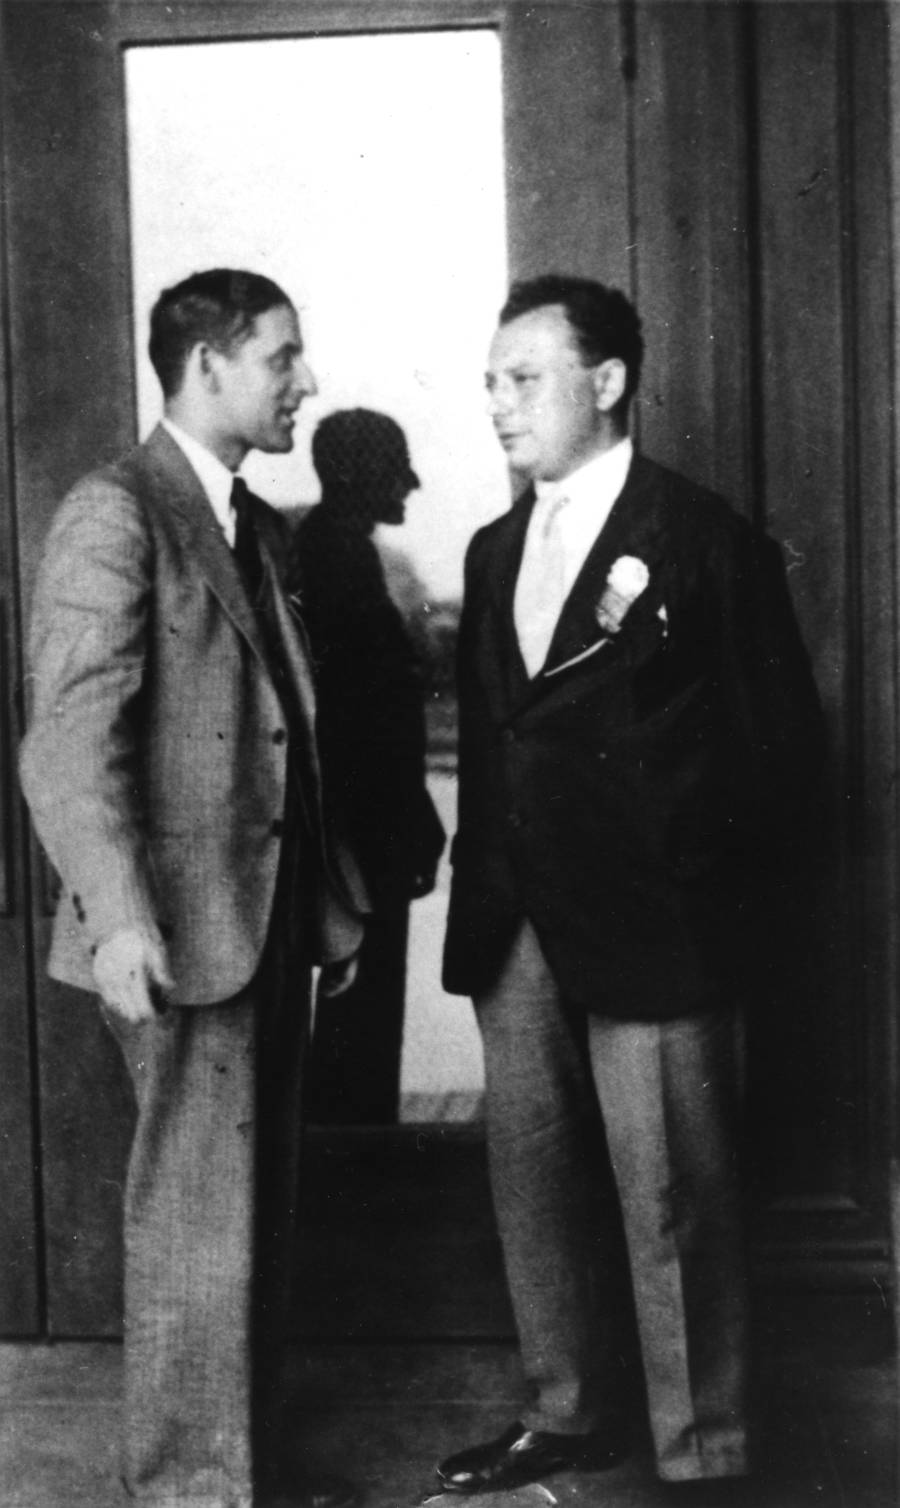 Samuel Goudsmit and Wolfgang Pauli at a Caltech physics meeting